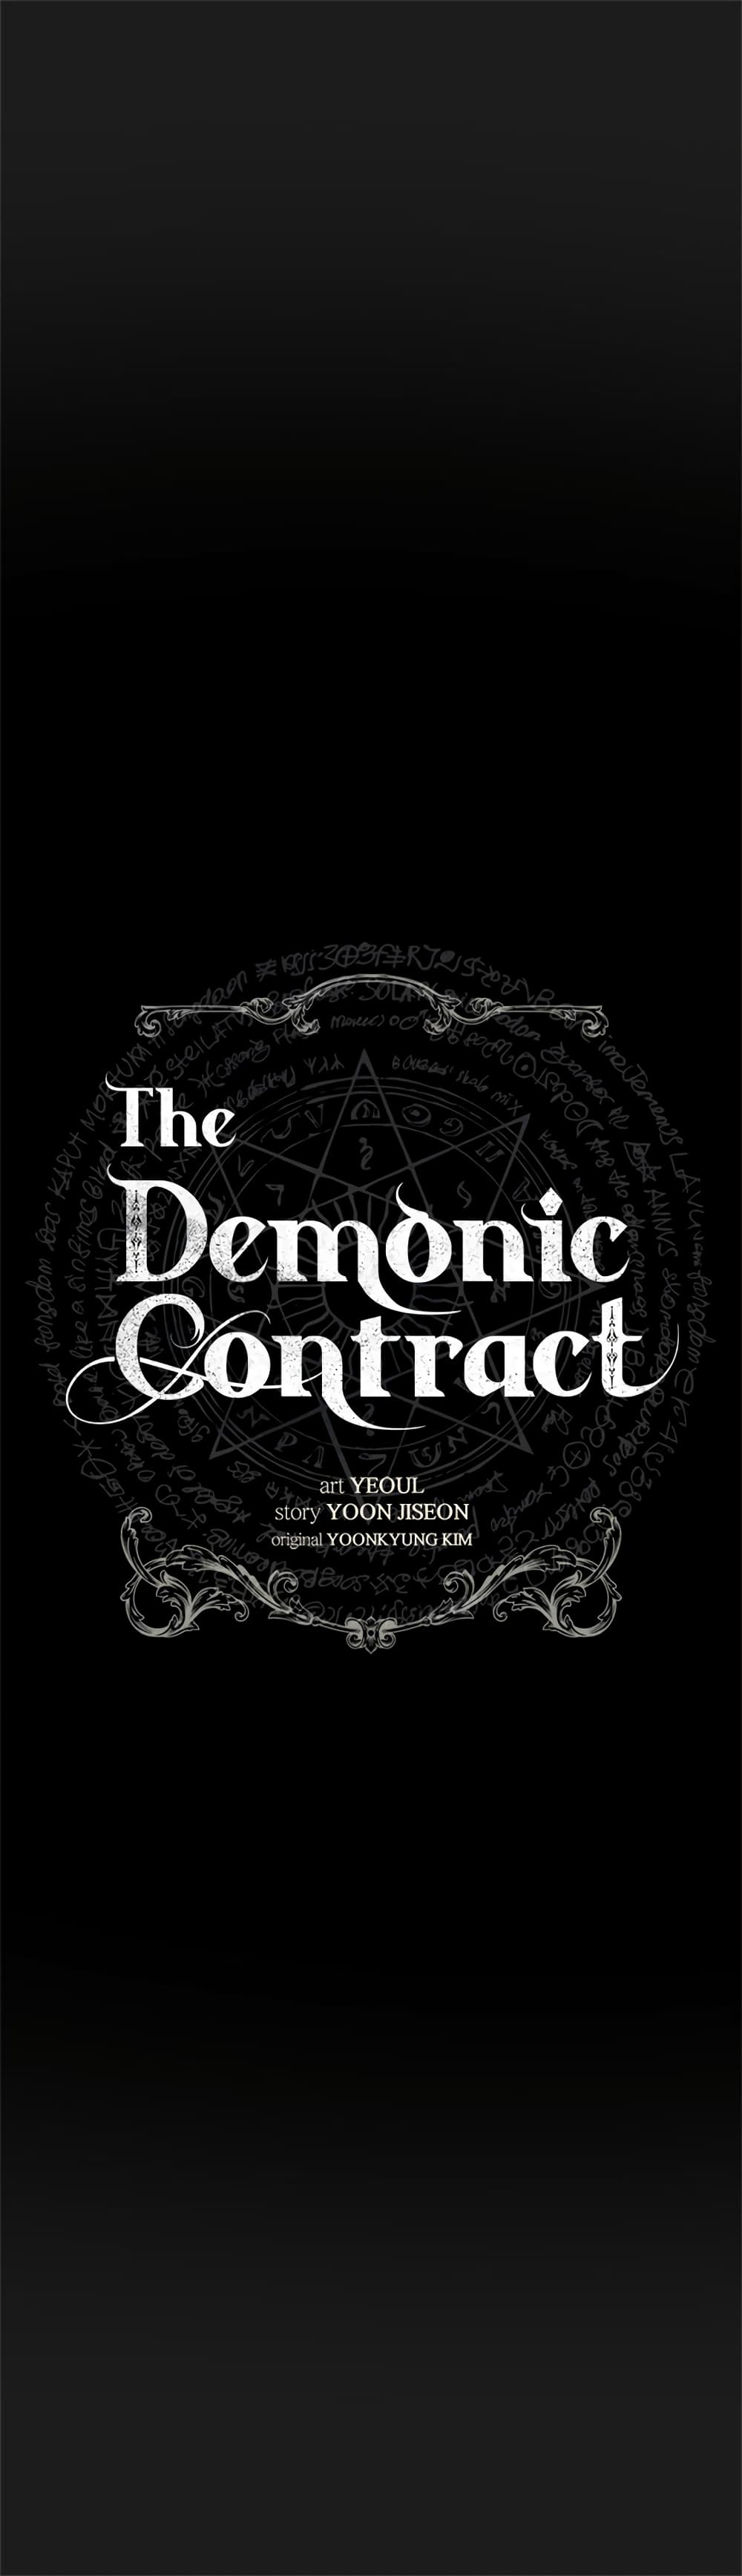 The Demonic Contract 38 (11)